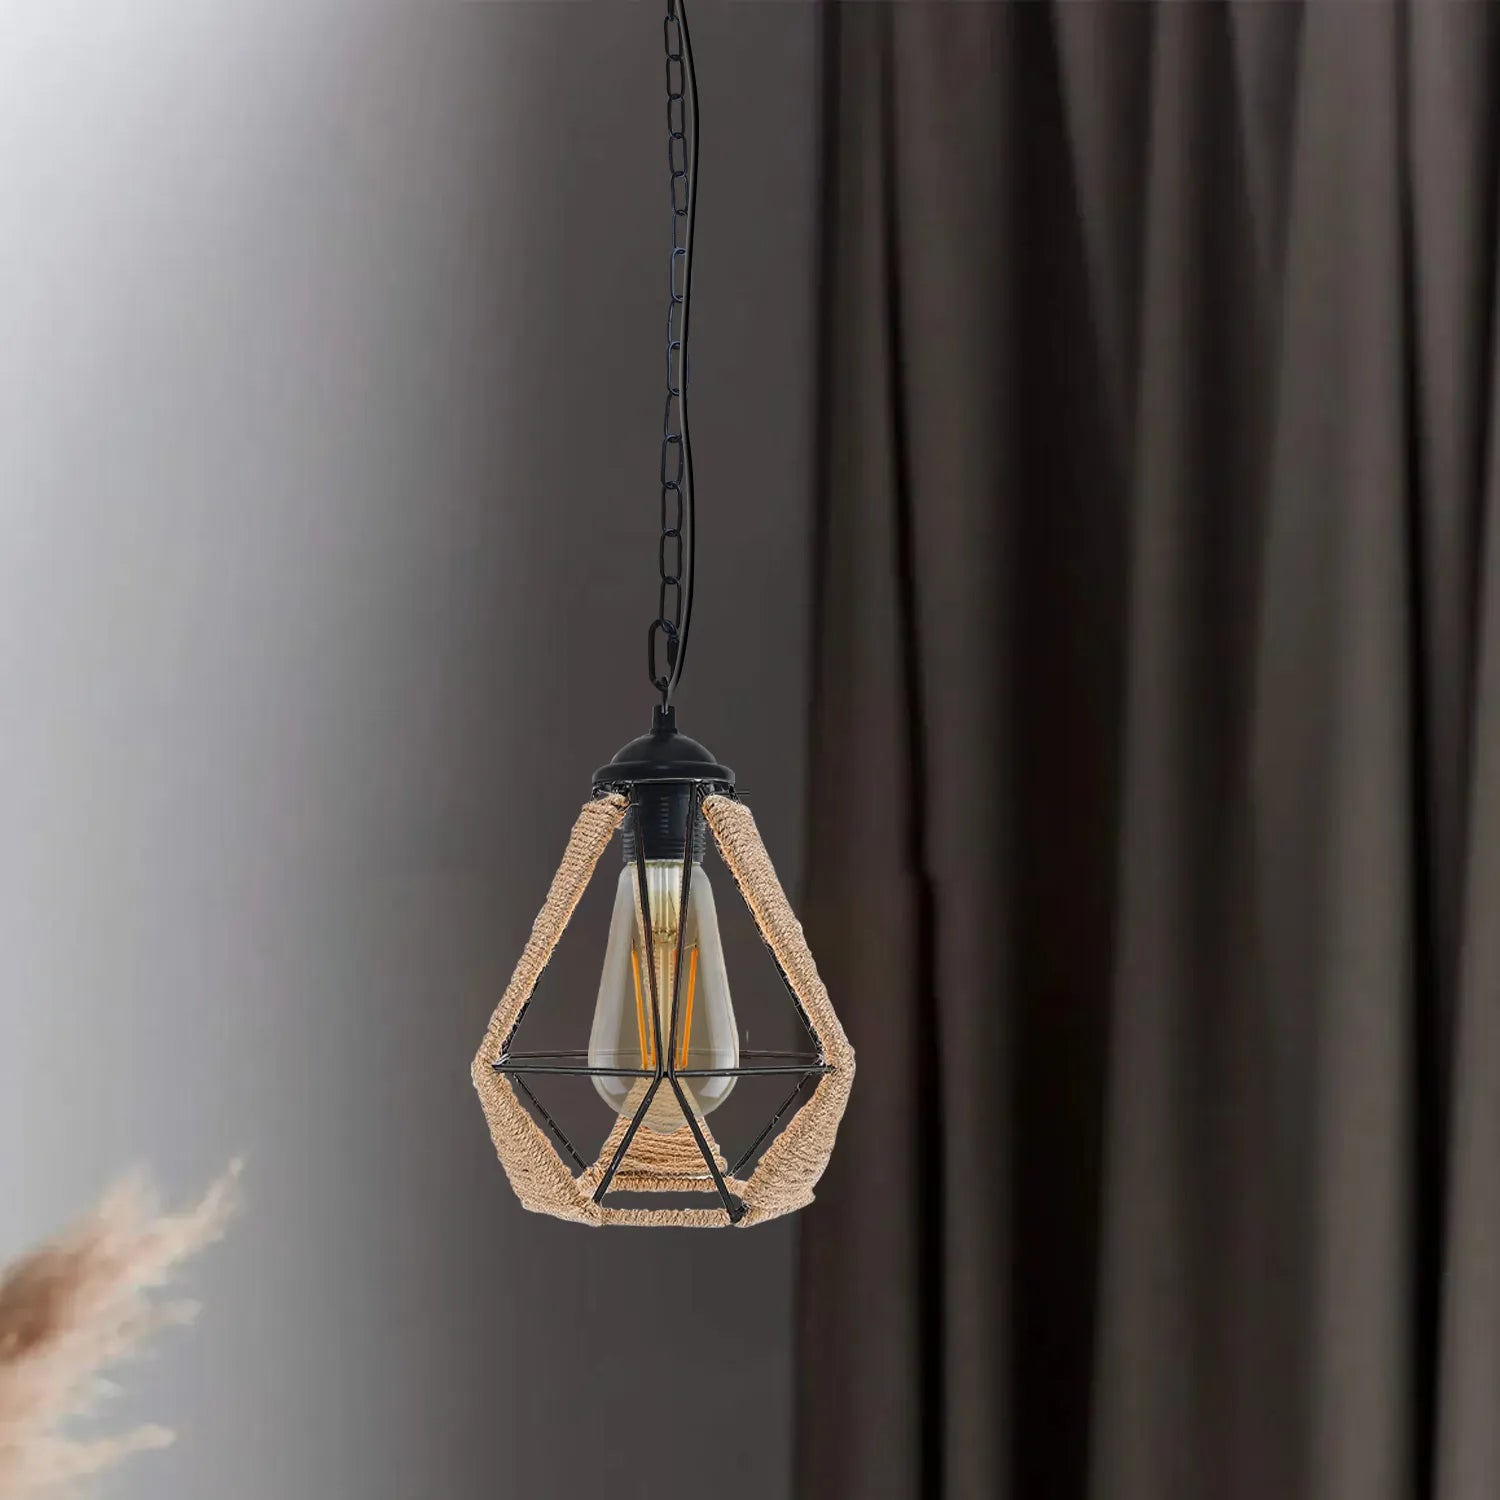 Black Pendant Light Fixture,60cm Lighting Hanging Pendant Lamp Fixture Chain ~4443